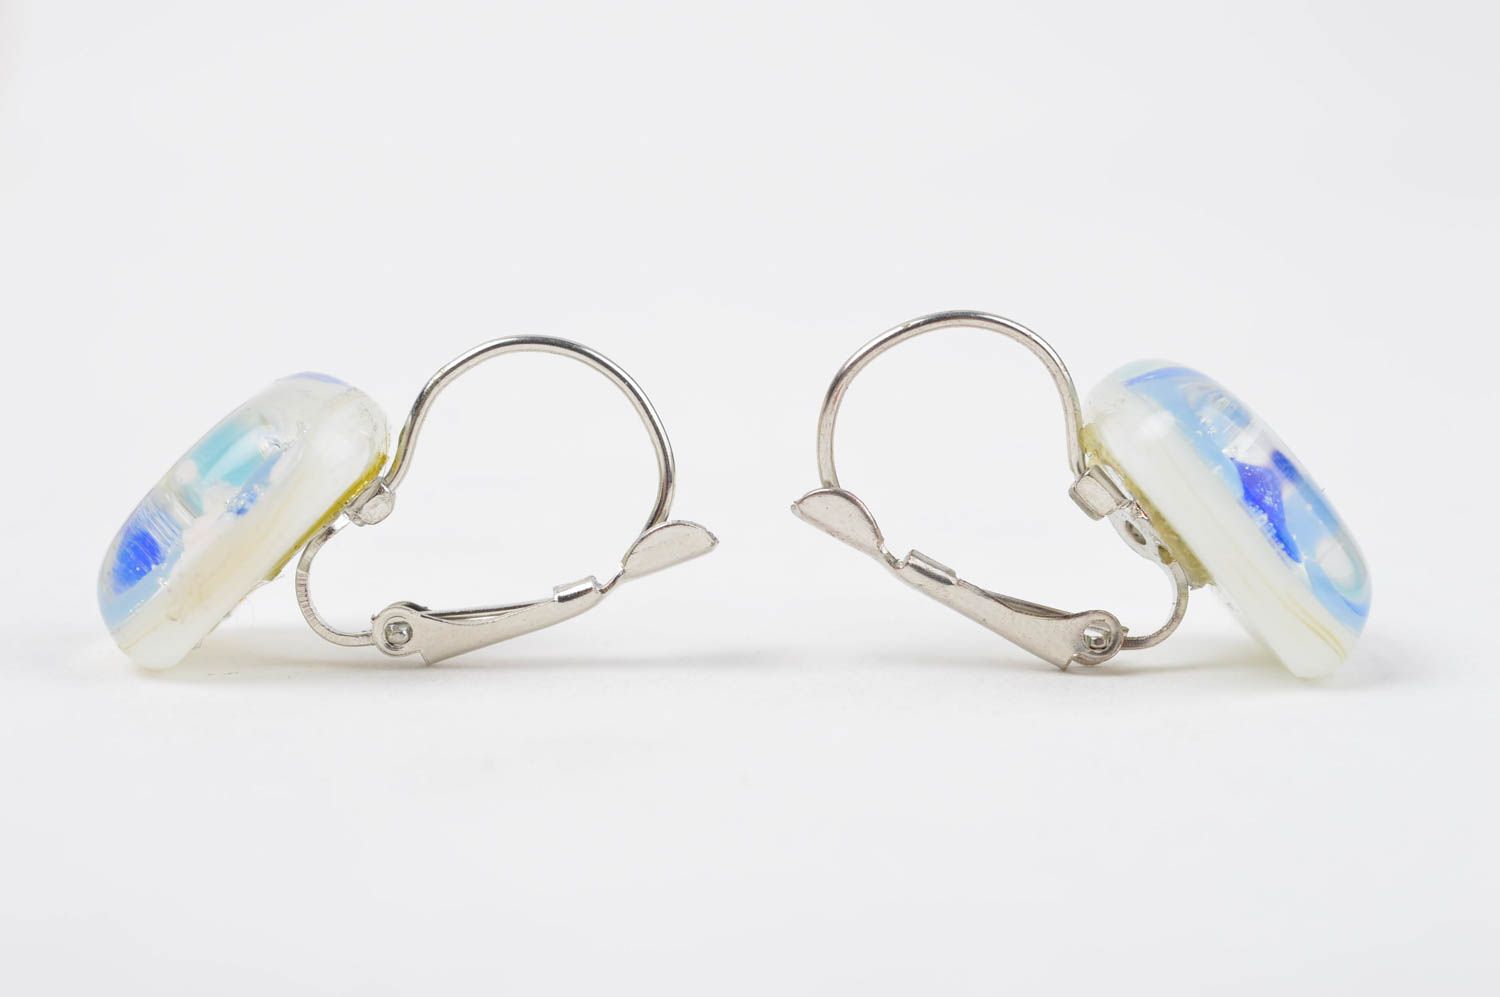 Beautiful handmade glass earrings glass fusing cool jewelry designs gift ideas photo 4